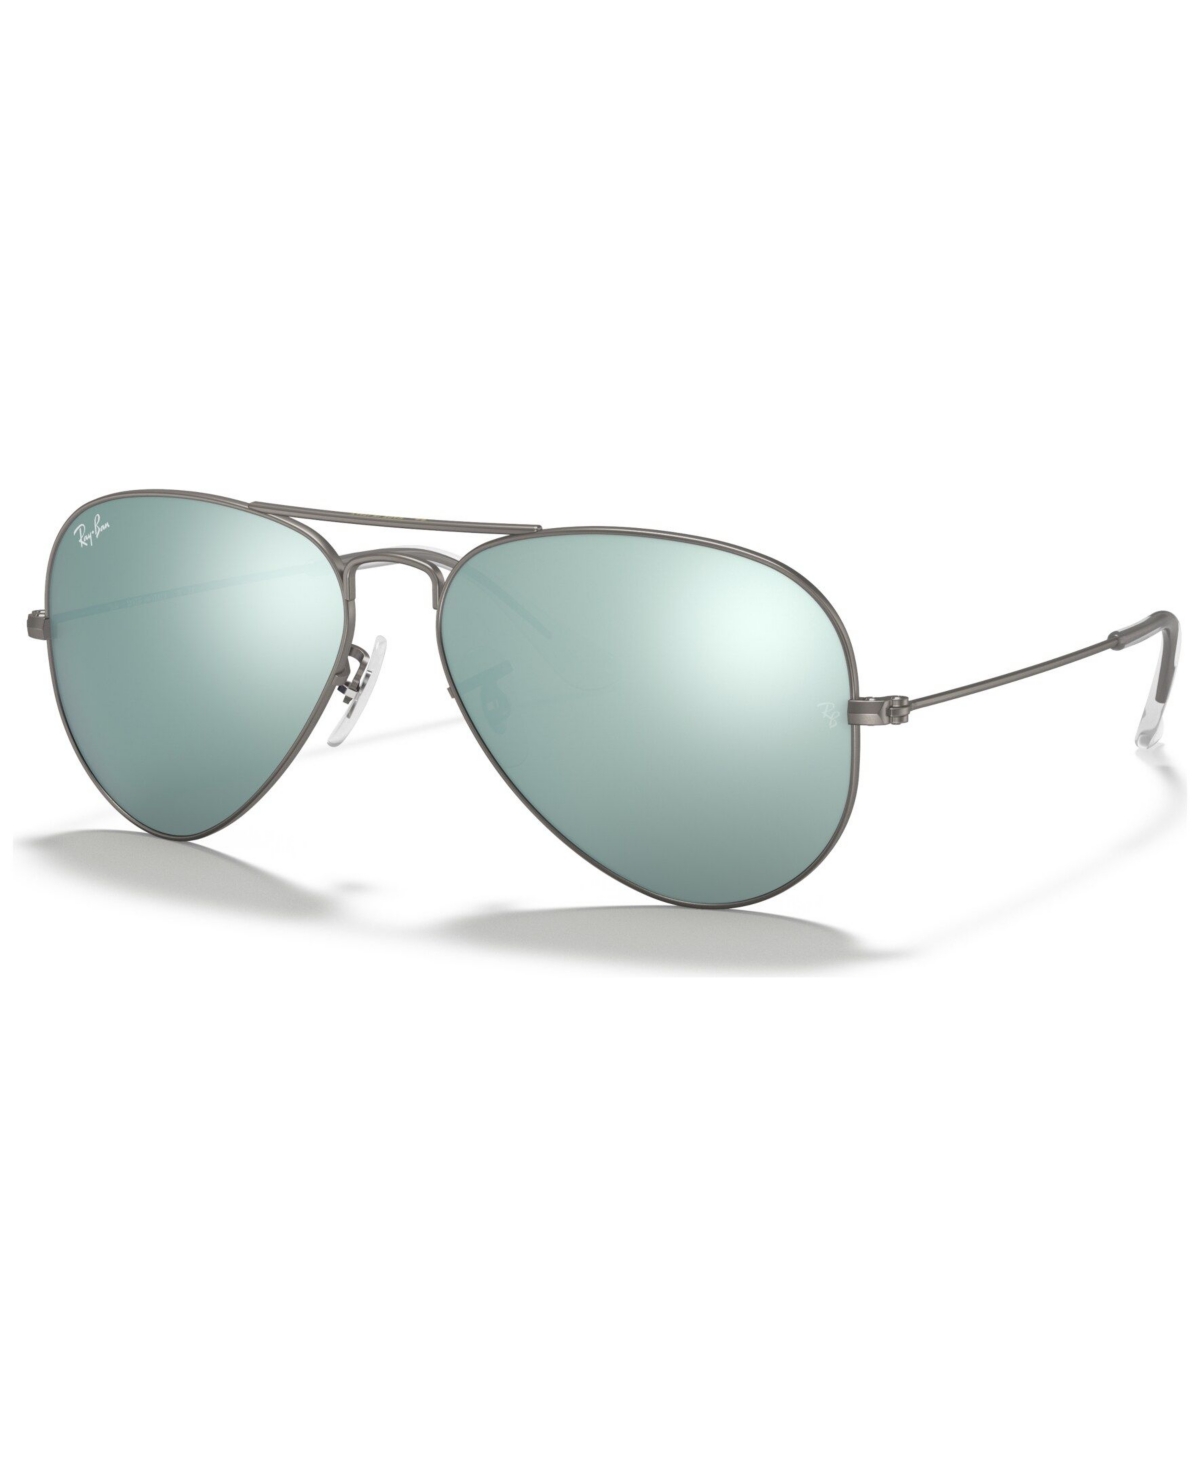 Ray-Ban Sunglasses, RB3025 58 Aviator Collection